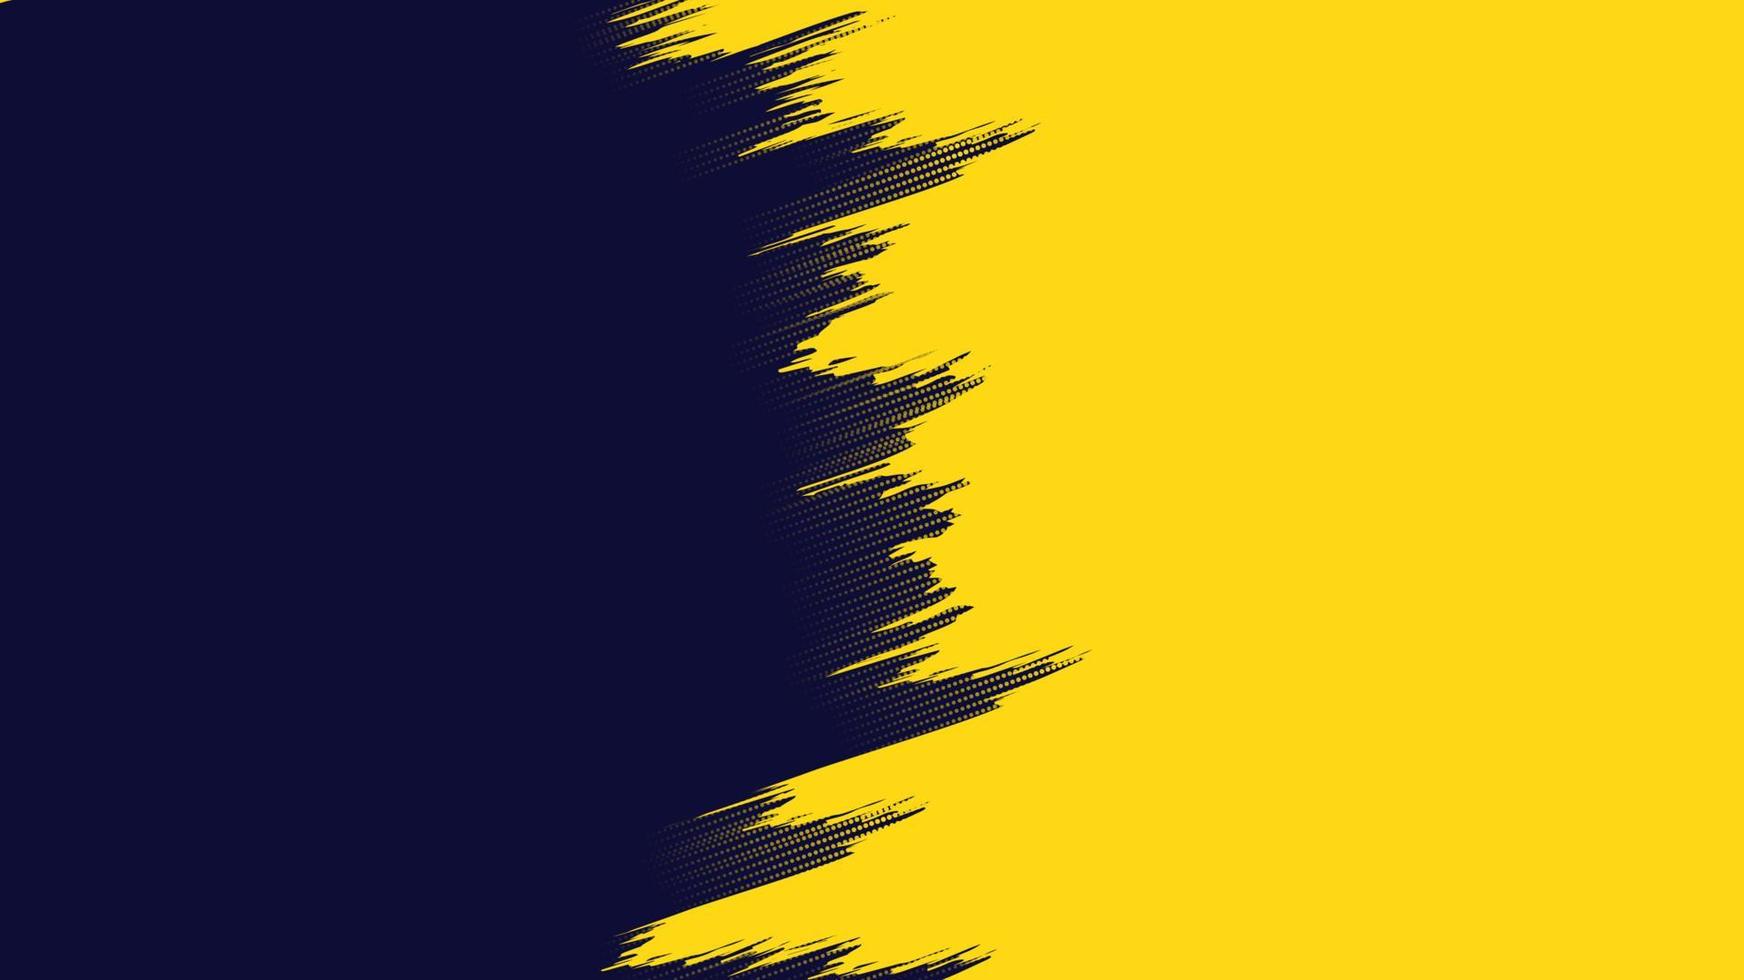 svart och gul grunge modern tumnagel bakgrund vektor